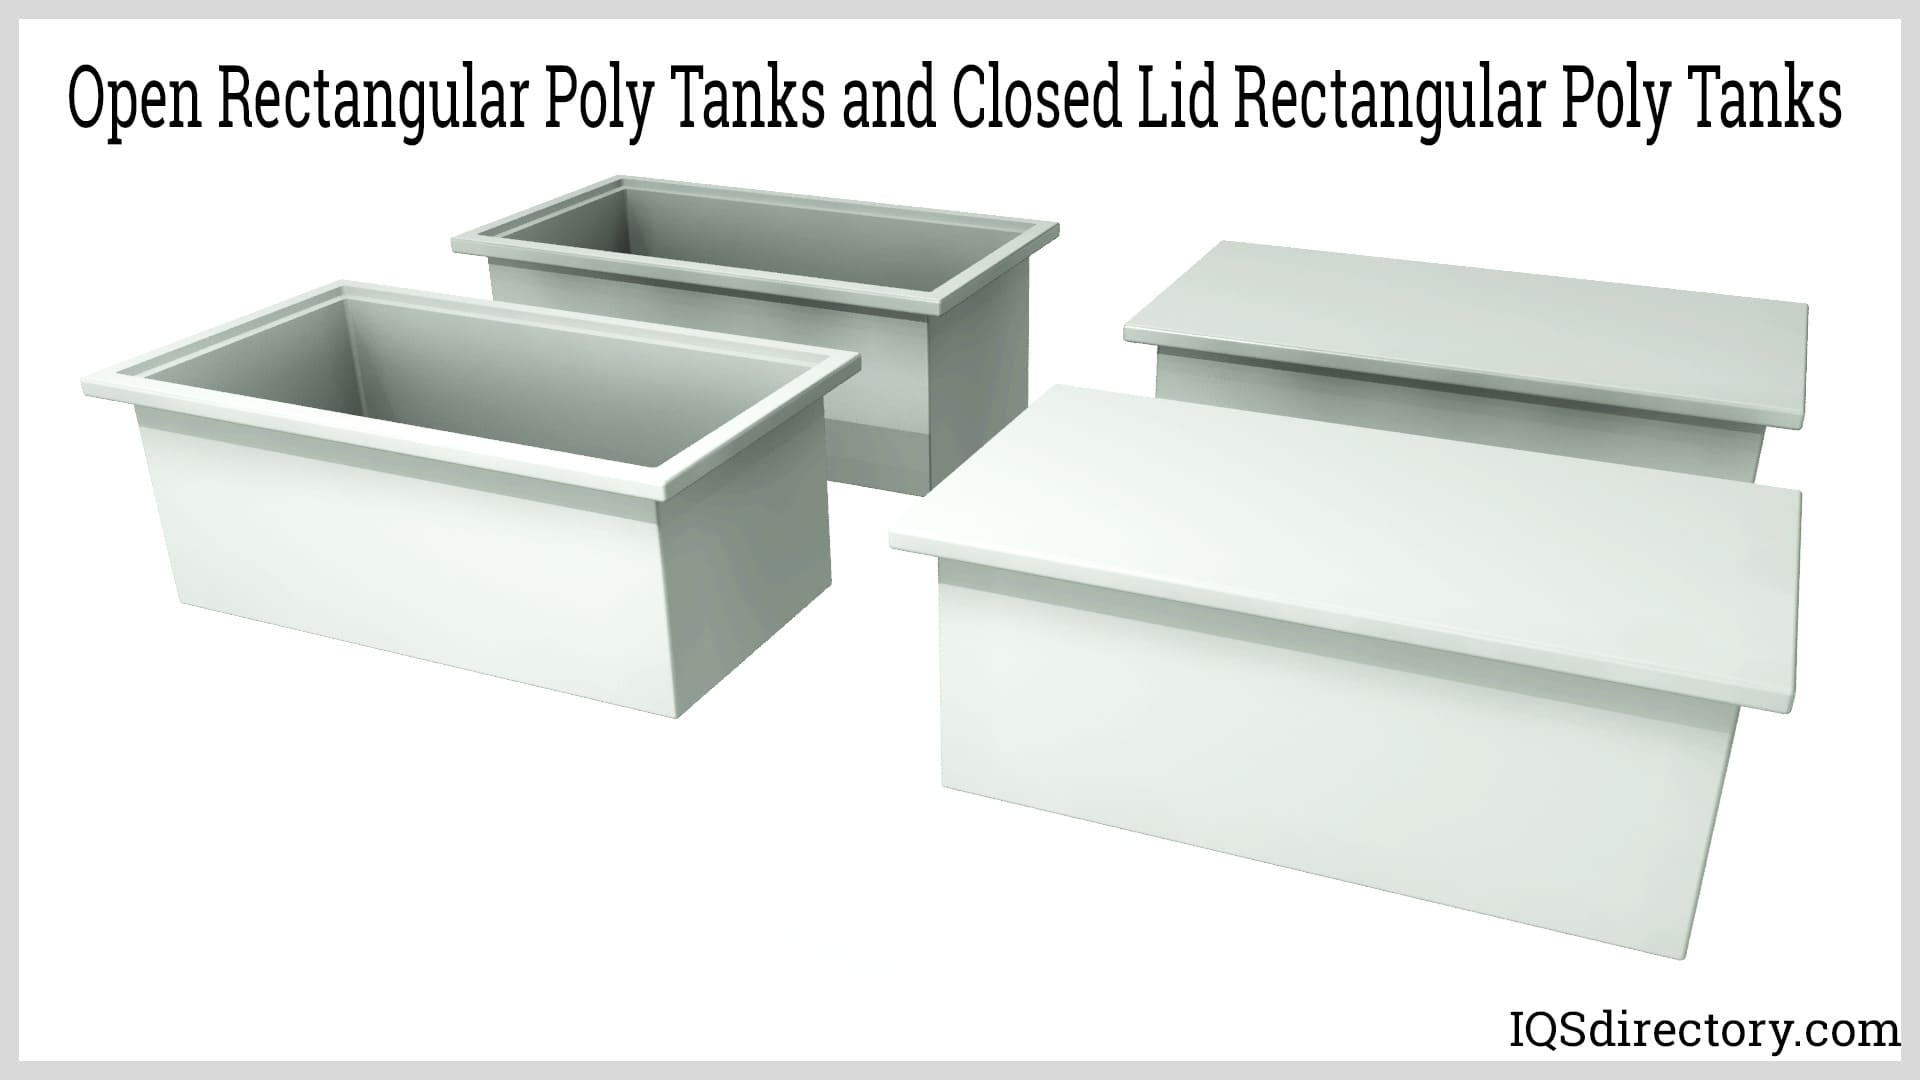 Open Rectangular Poly Tanks and Closed Lid Rectangular Poly Tanks